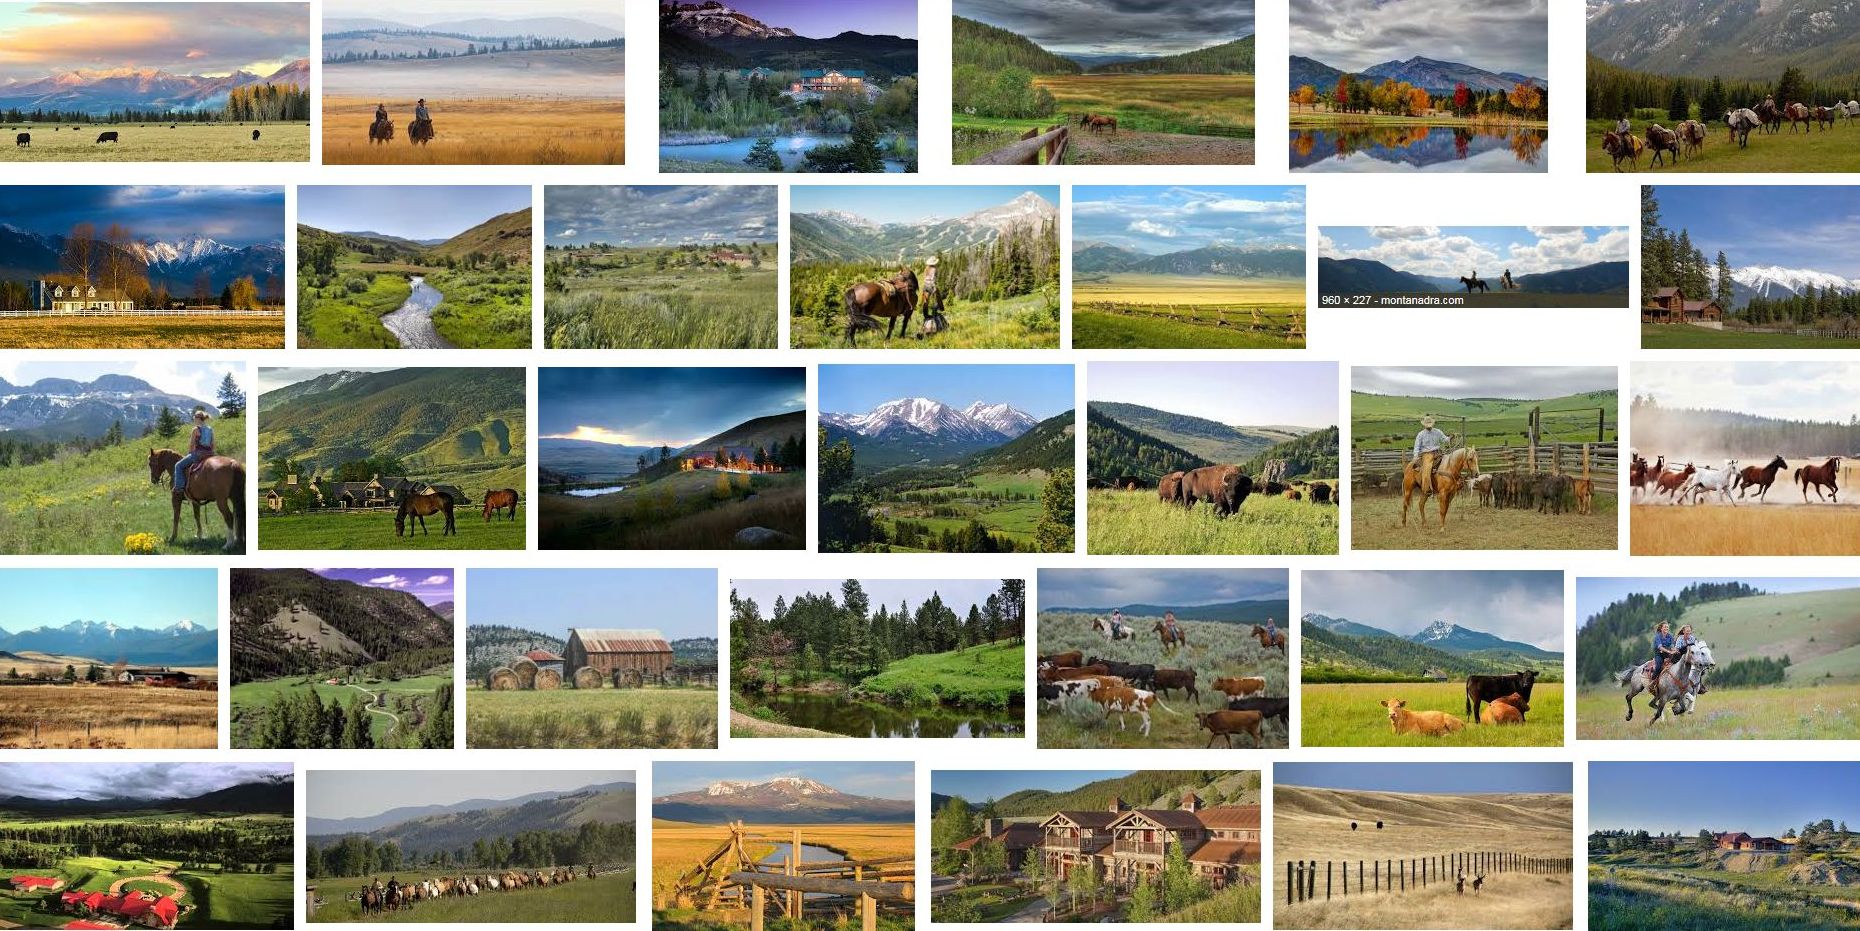 Montana Ranch Listings $2 Million To $4 Million